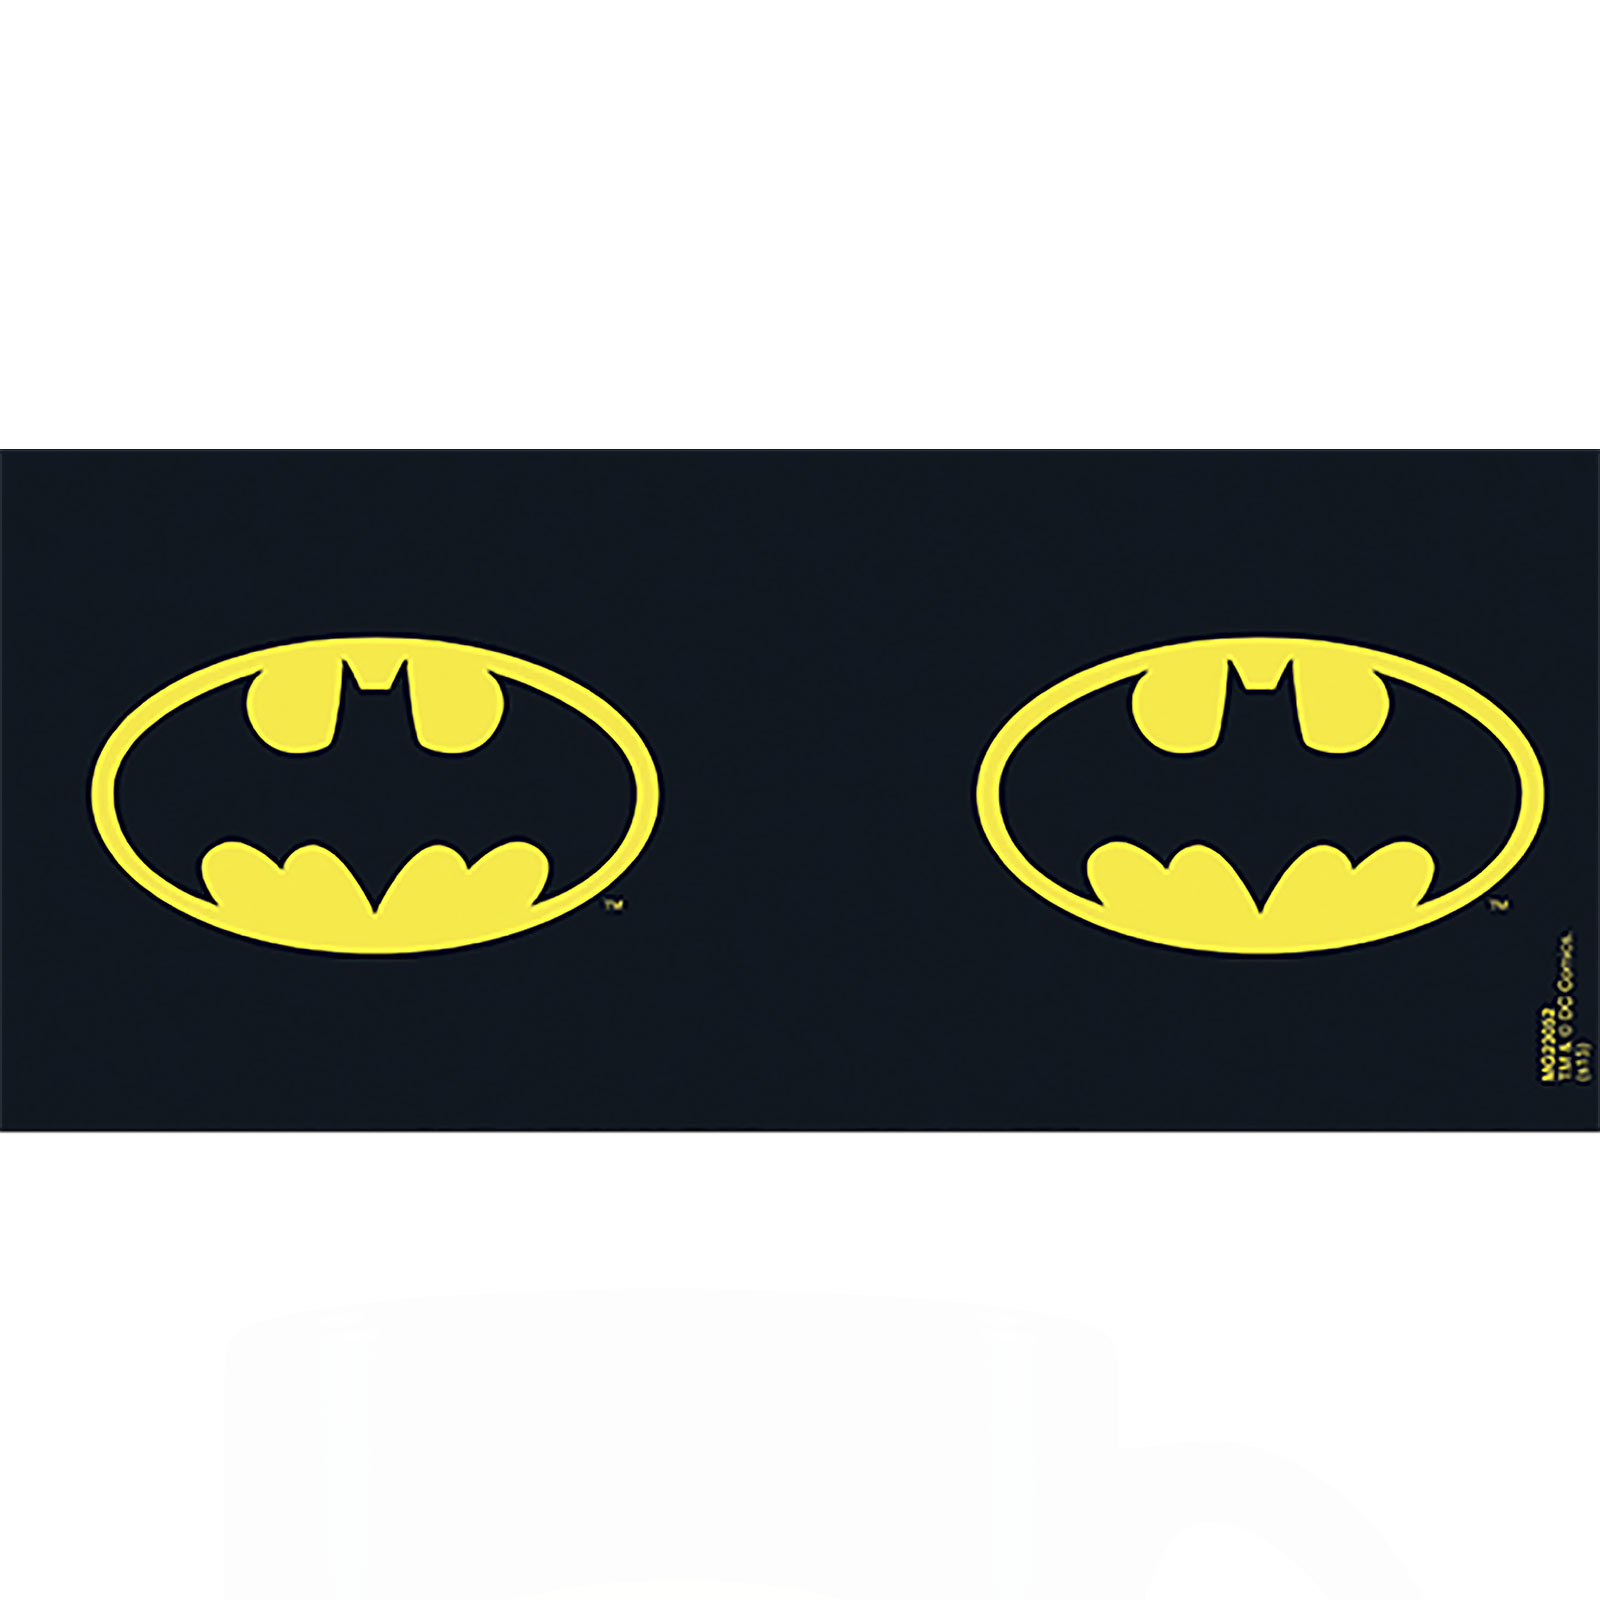 Batman - Classic Logo Tasse